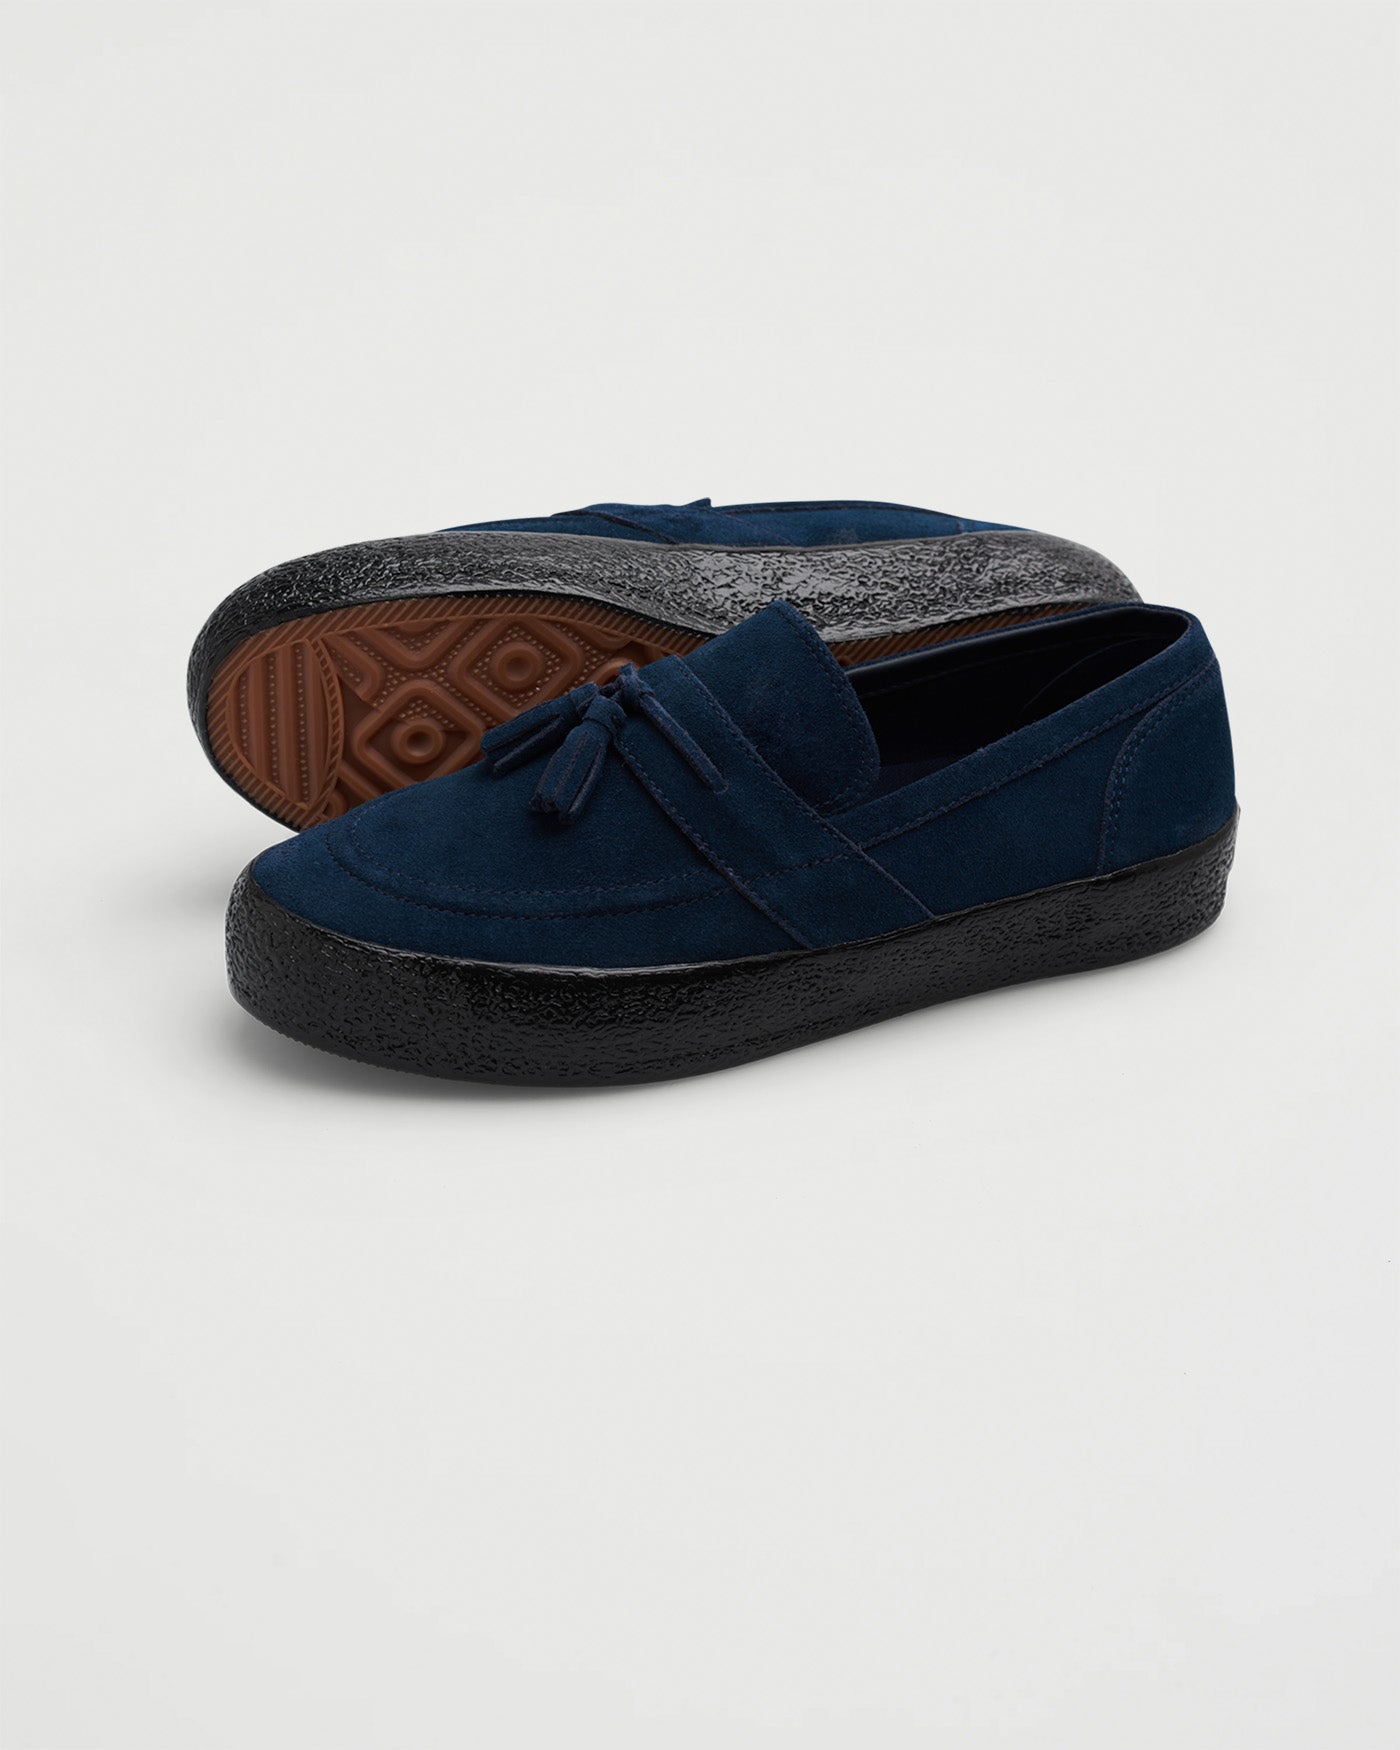 Last Resort AB VM005 Loafer Dress Blues/Black Shoes Sneakers Unisex